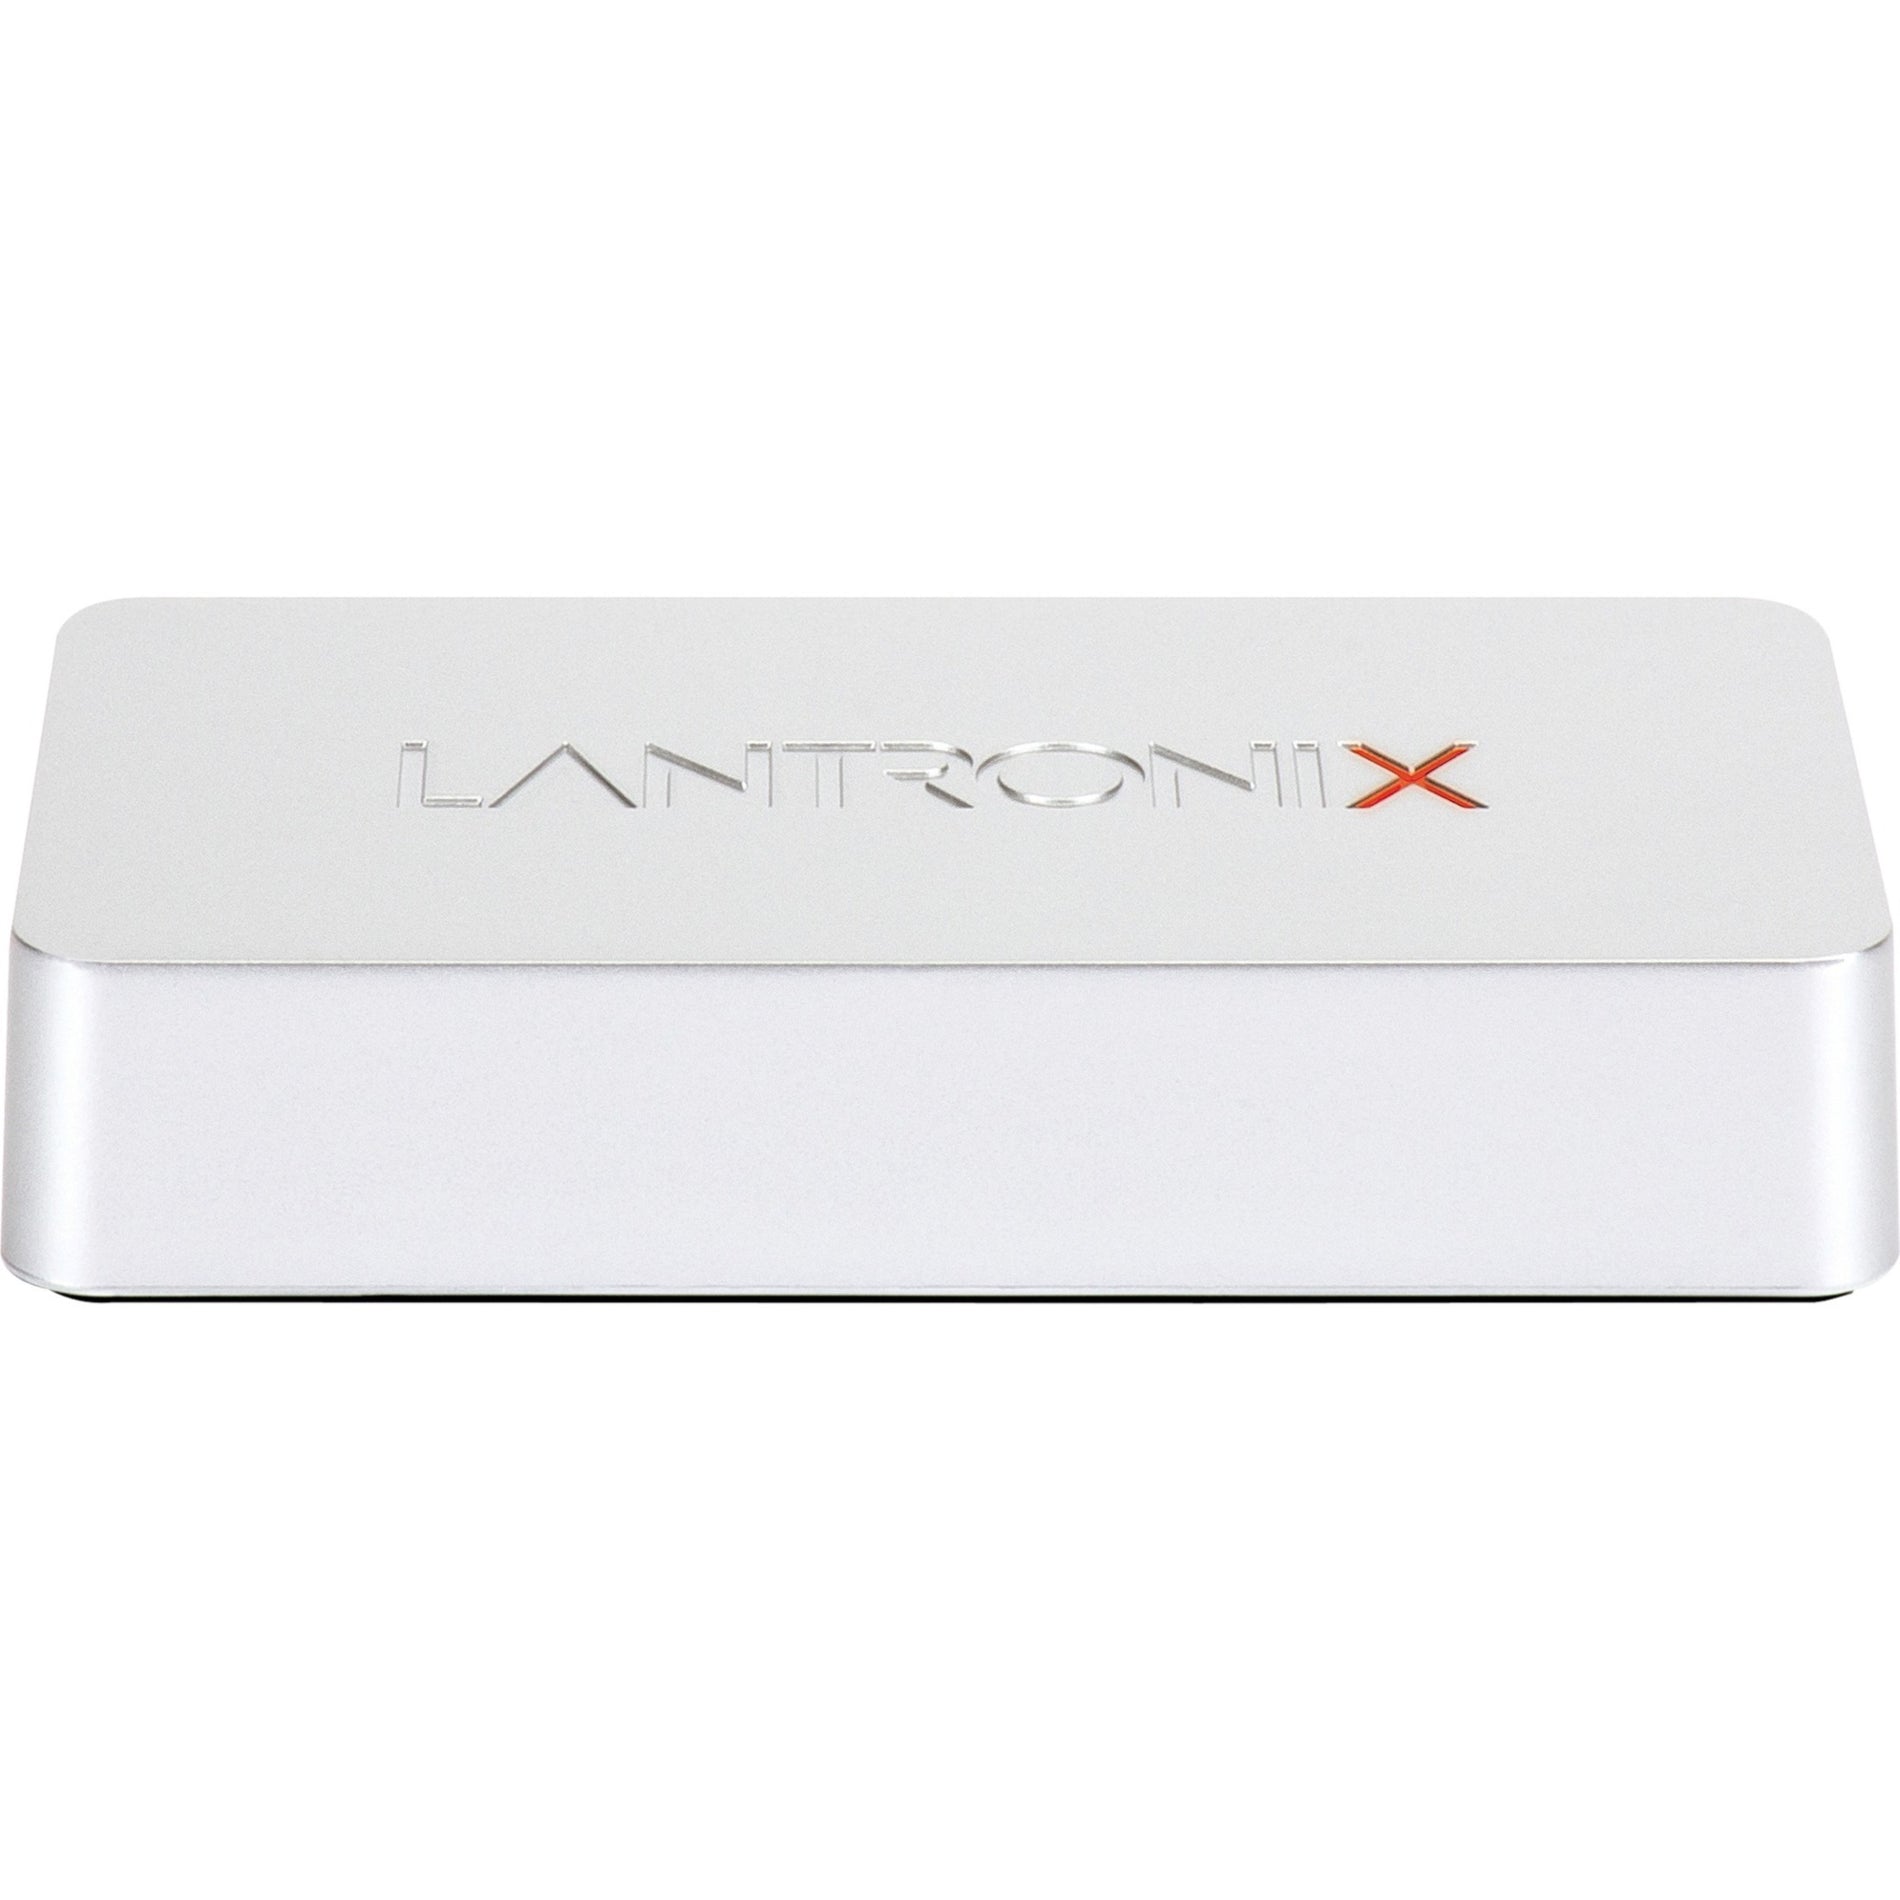 Lantronix XPS1002FC-02-S xPrintServer Office, Print Server for Easy Network Printing